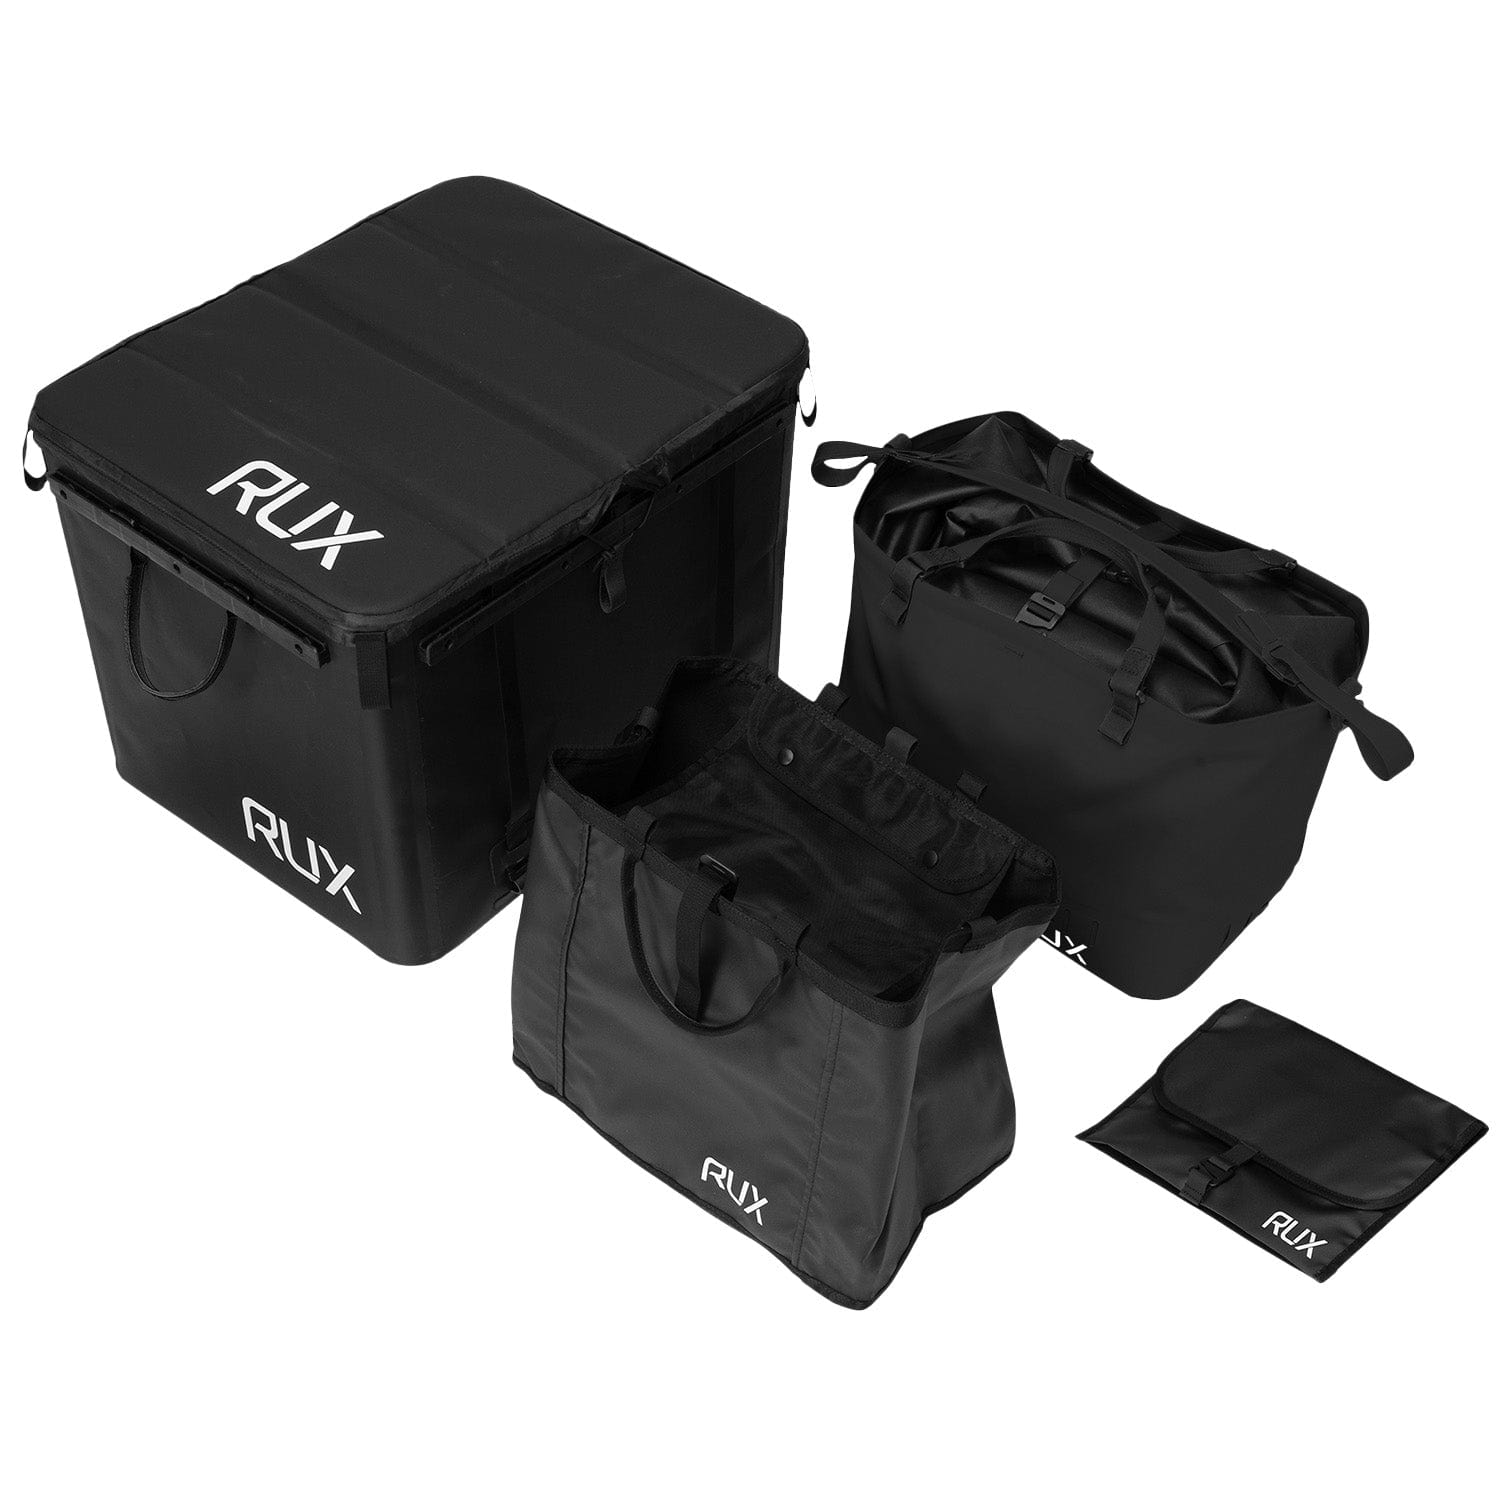 RUX gear storage system, plus 25LWaterproof Bag